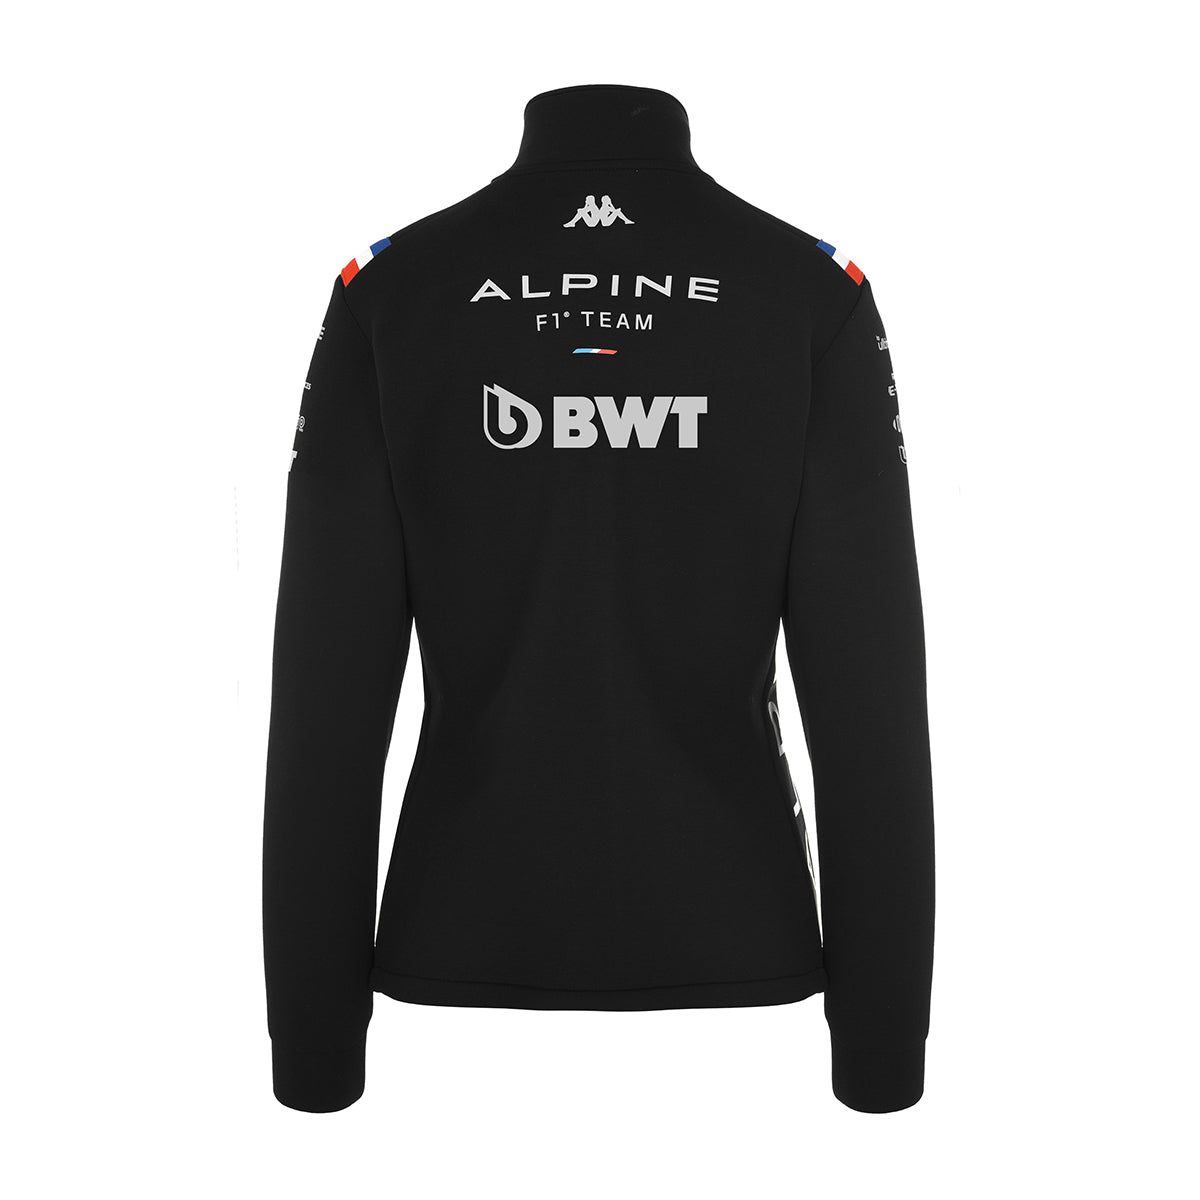 Veste Atrew BWT Alpine F1 Team Noir Femme - Image 3